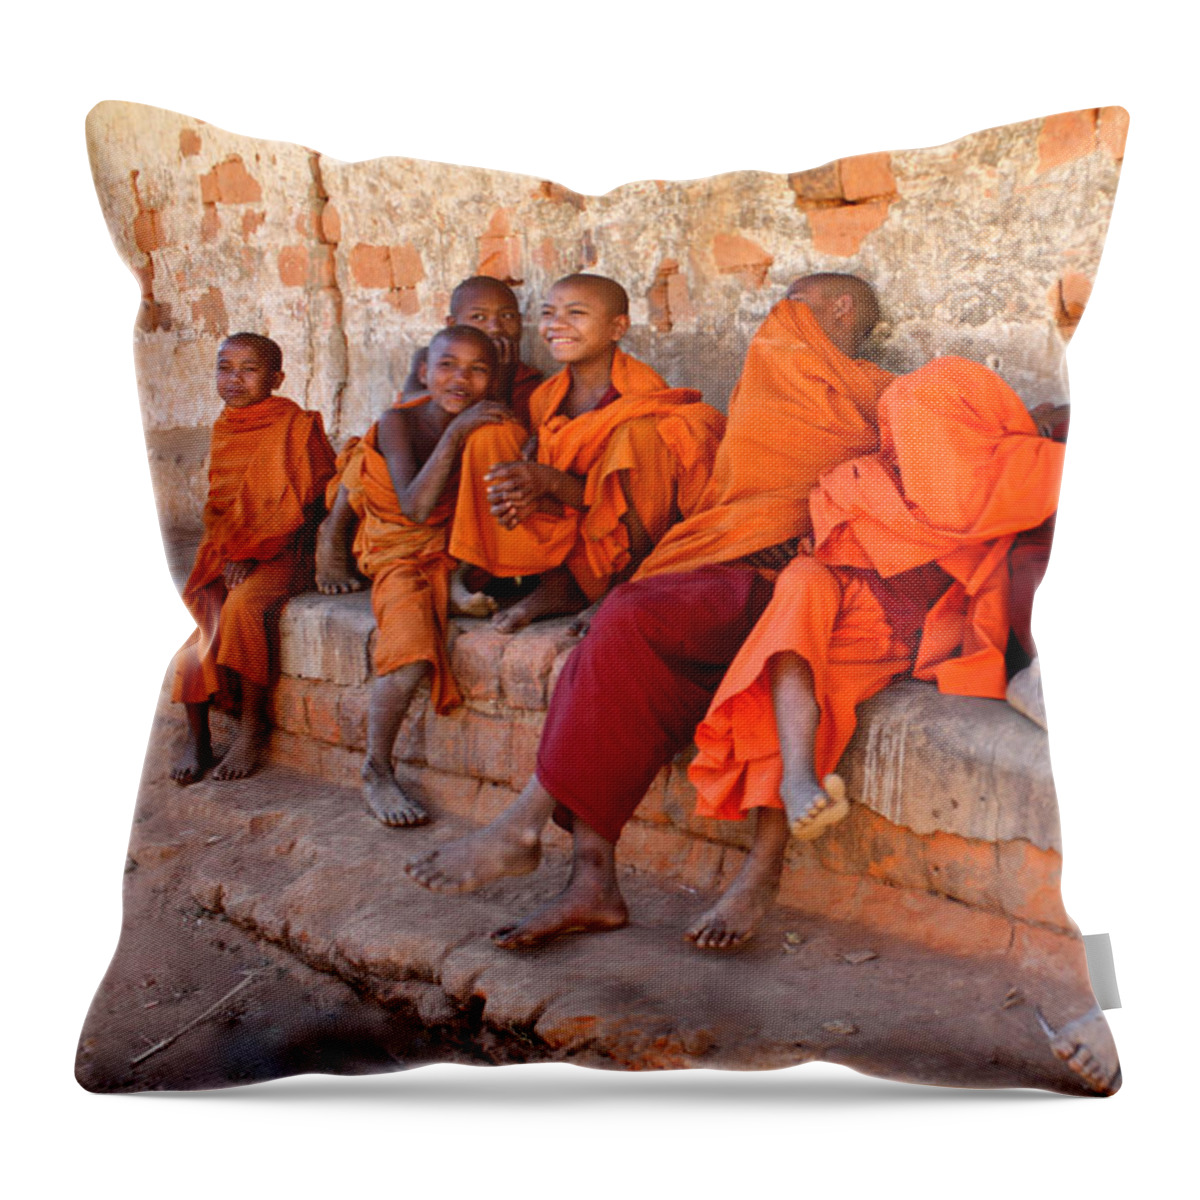 śrāmaṇera Throw Pillow featuring the photograph Novice Buddhist Monks by Venetia Featherstone-Witty